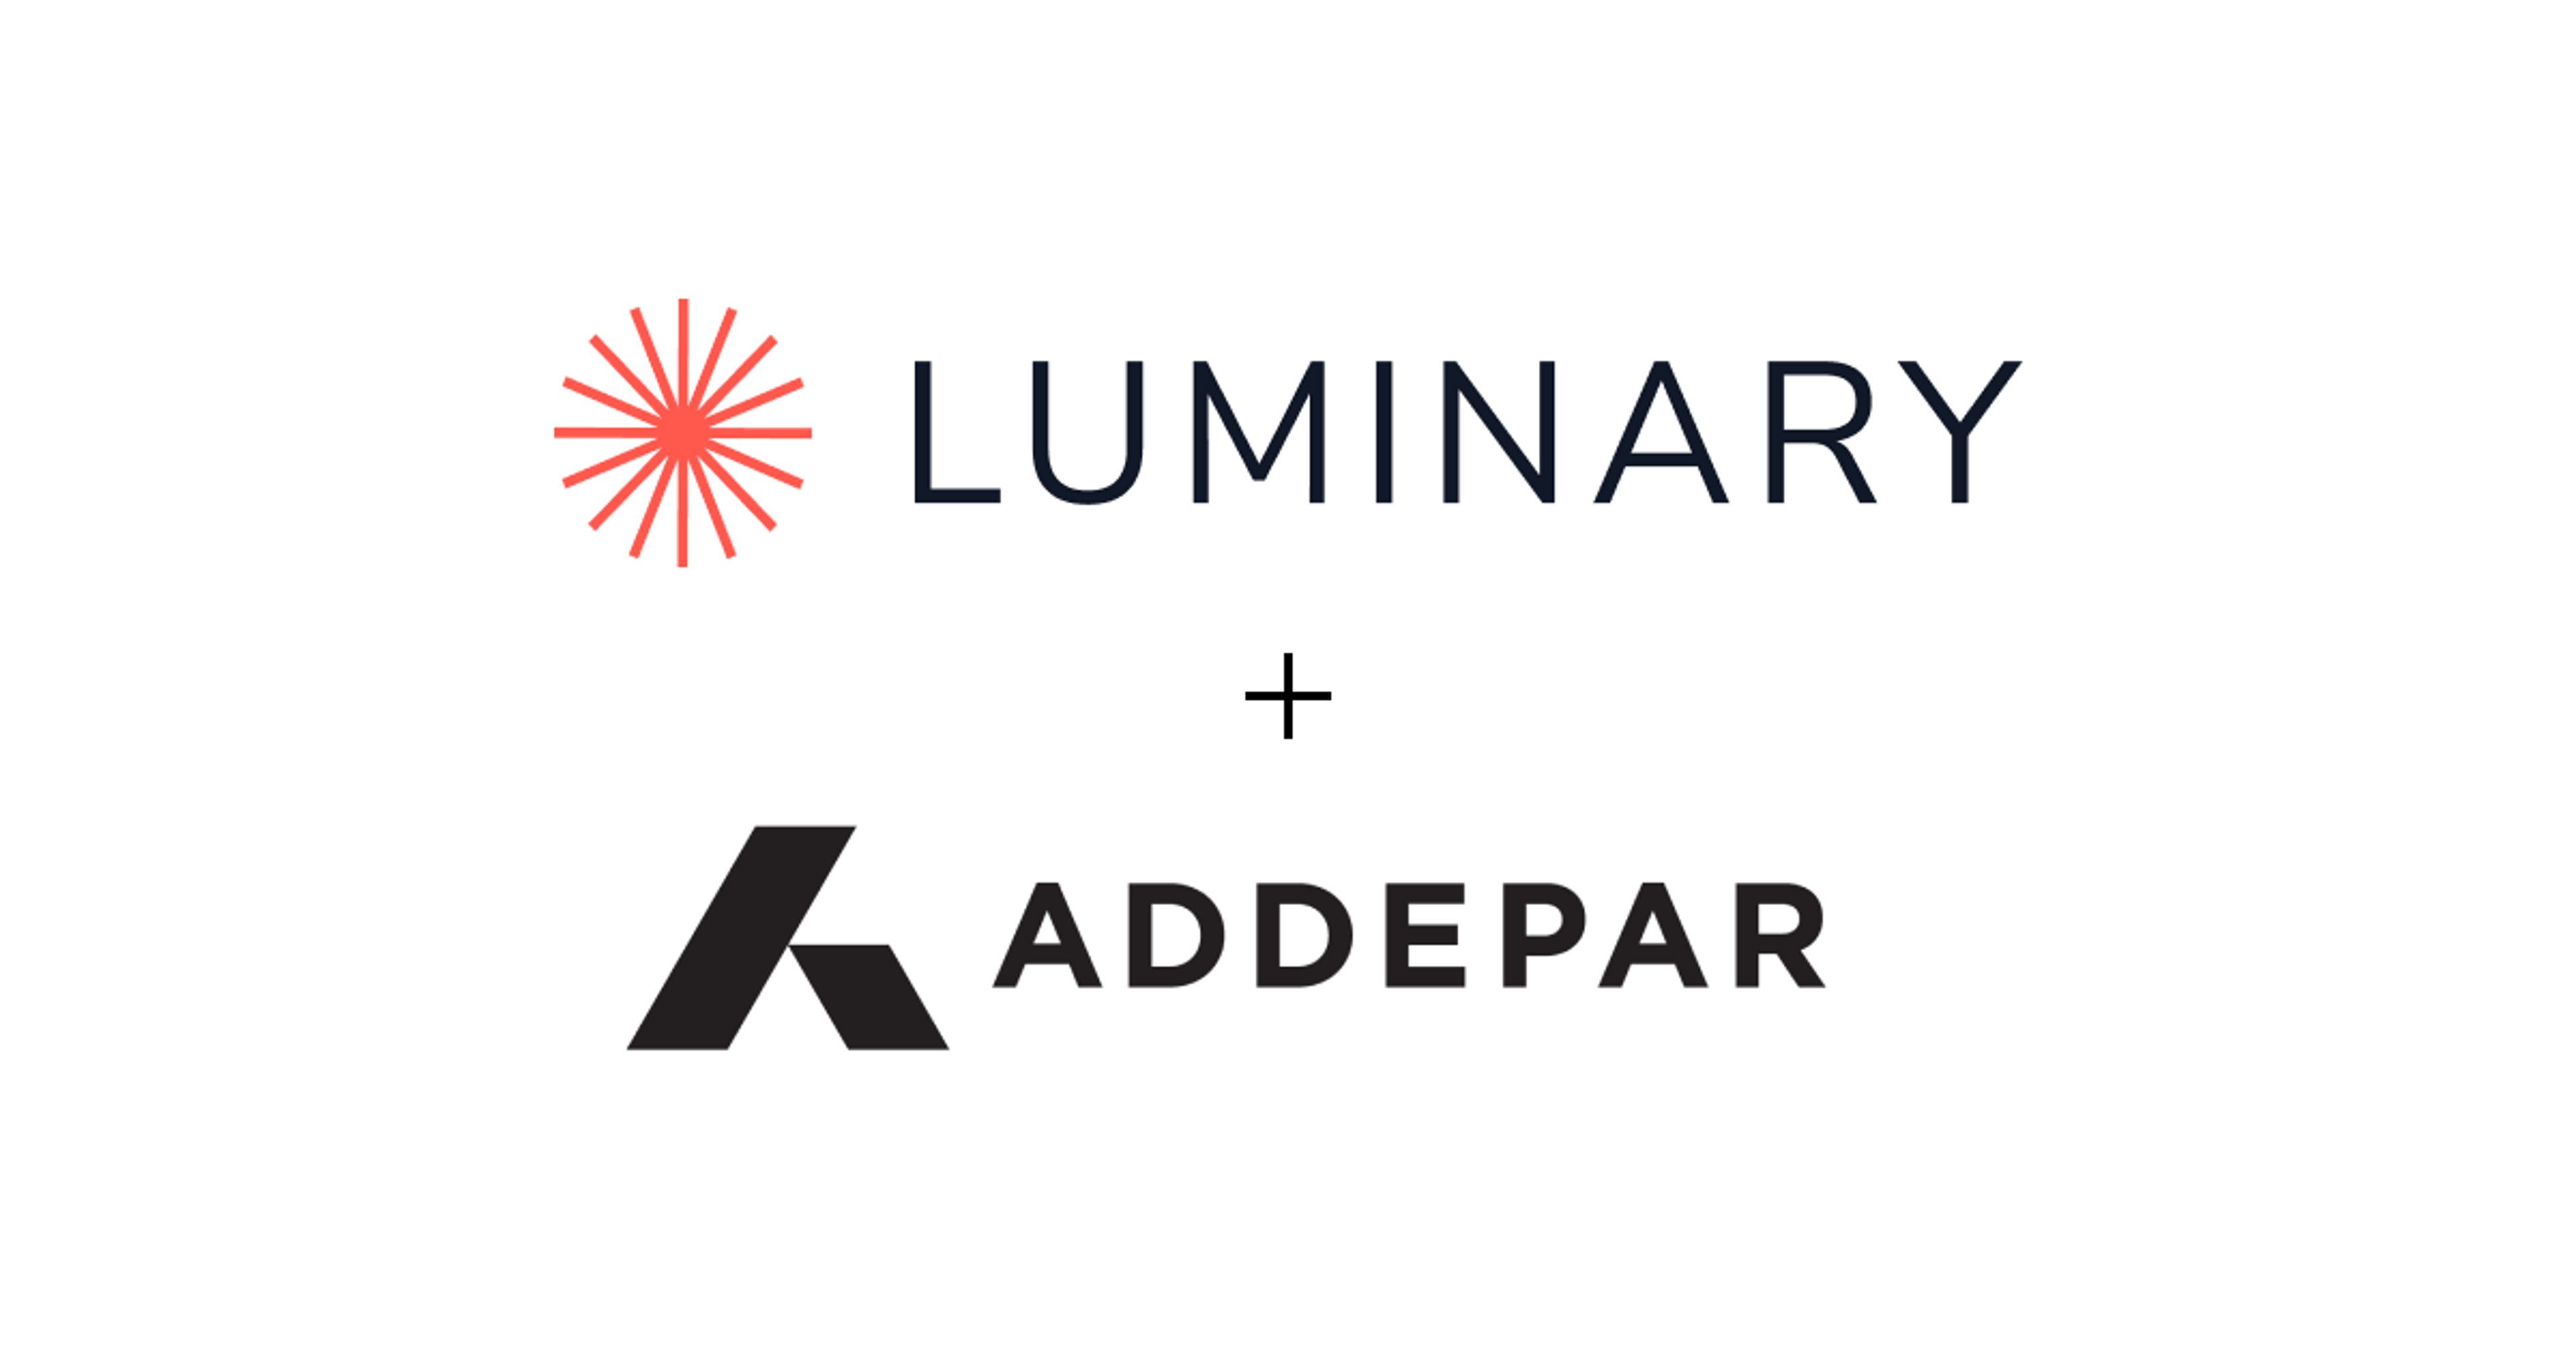 Luminary + Addepar